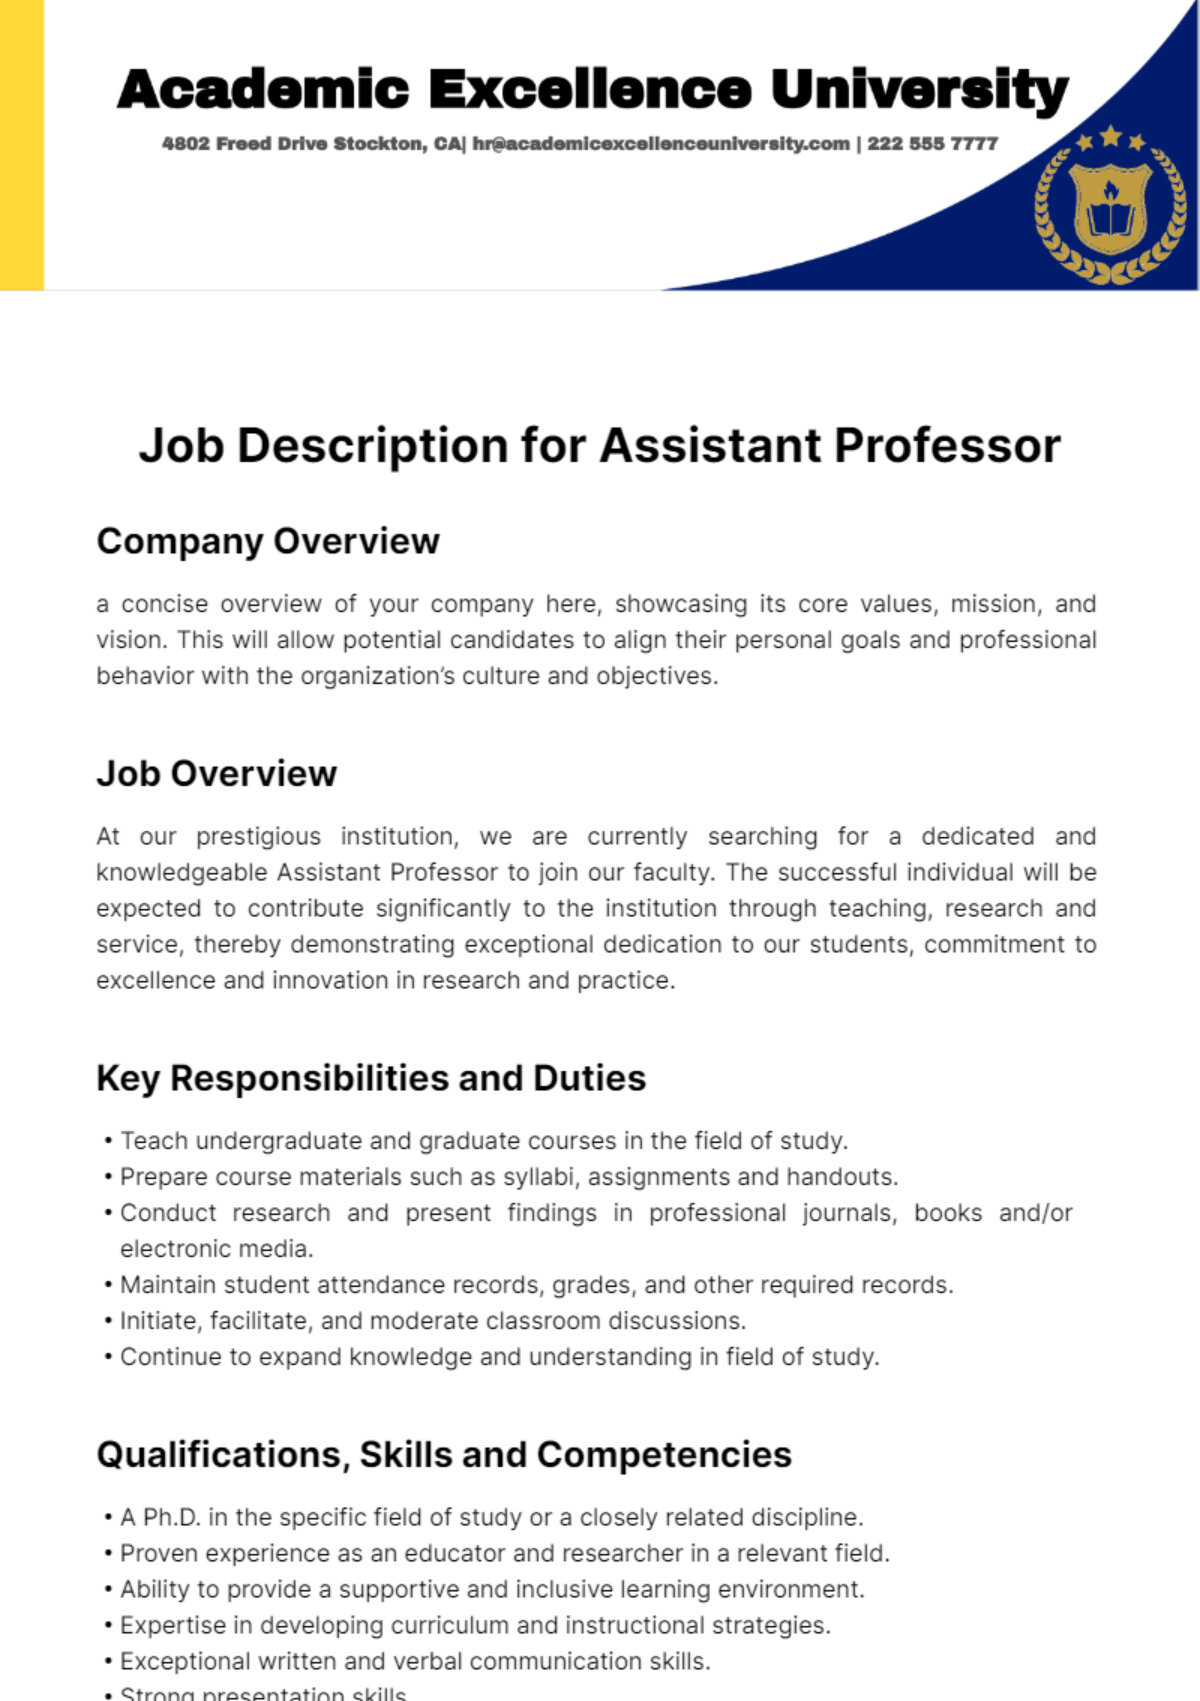 Job Description for Assistant Professor Template